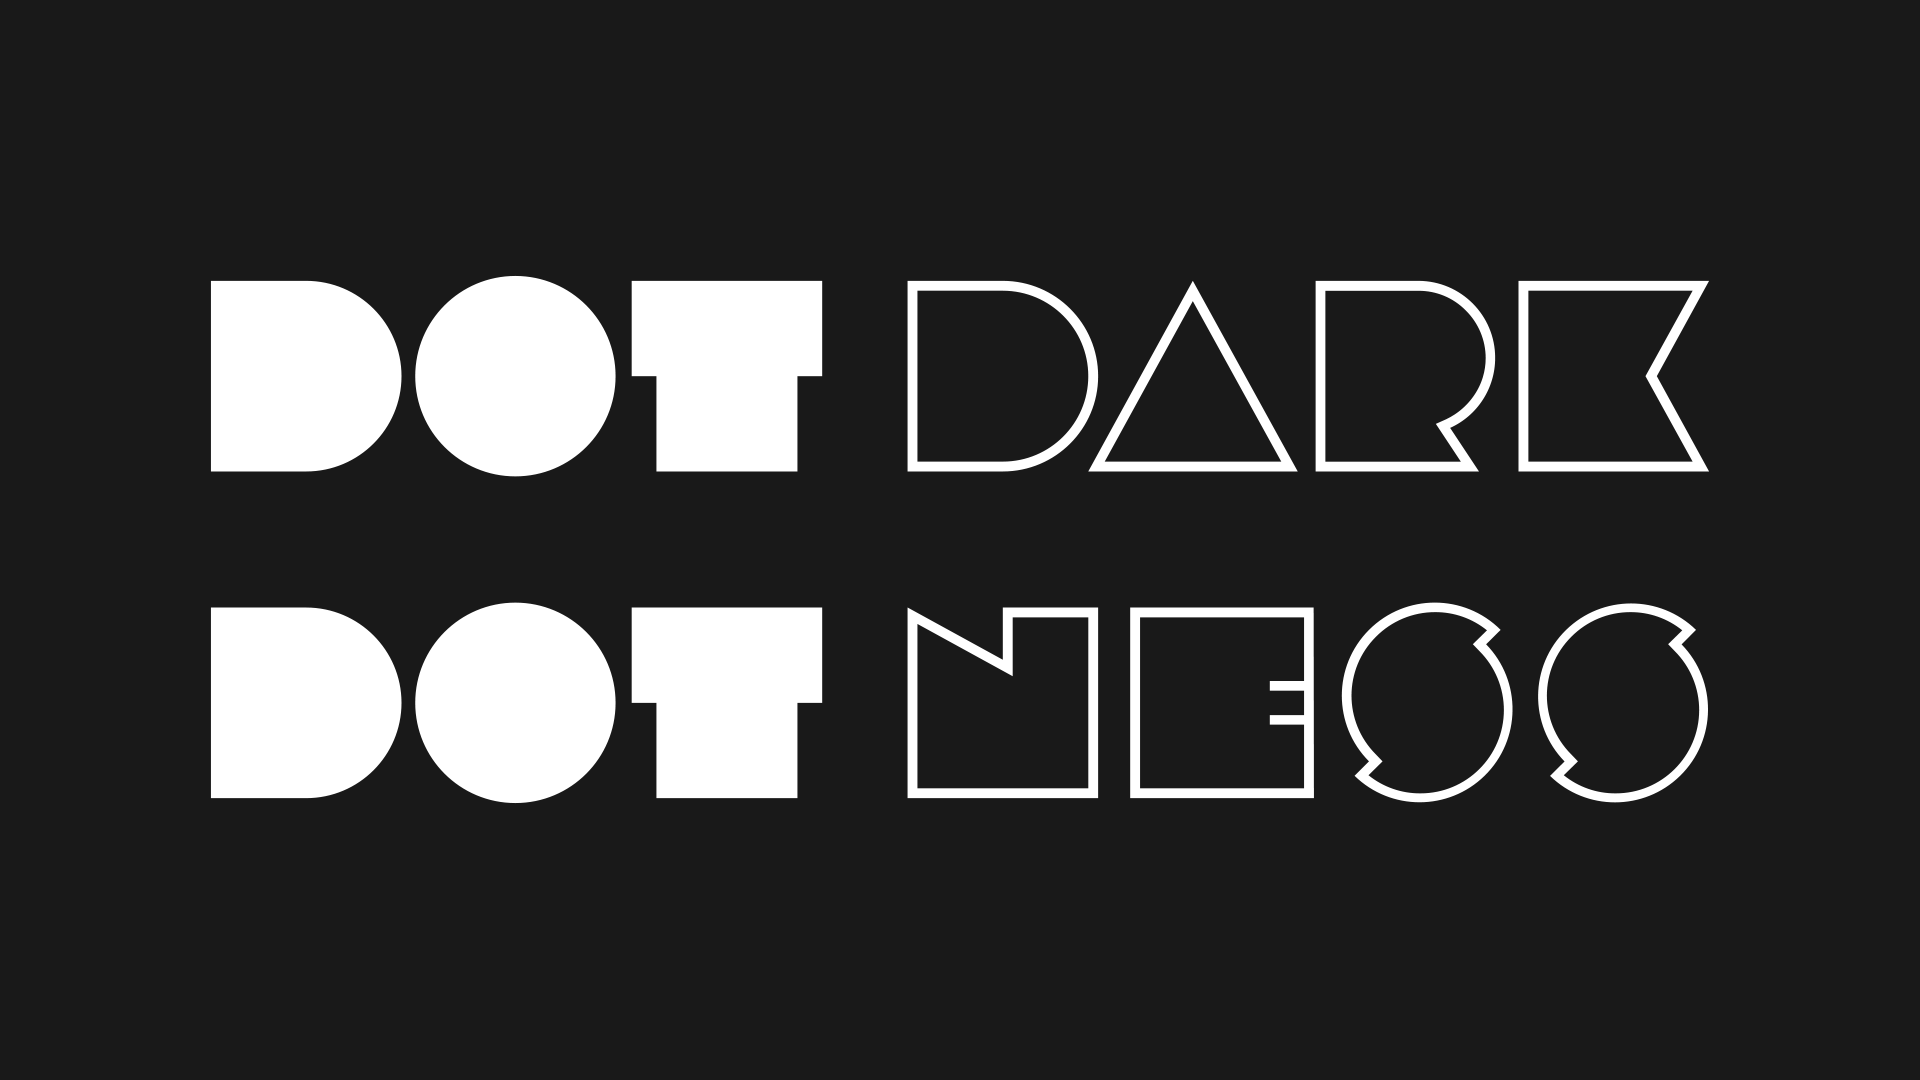 An example of the standard dot dot darkness logo